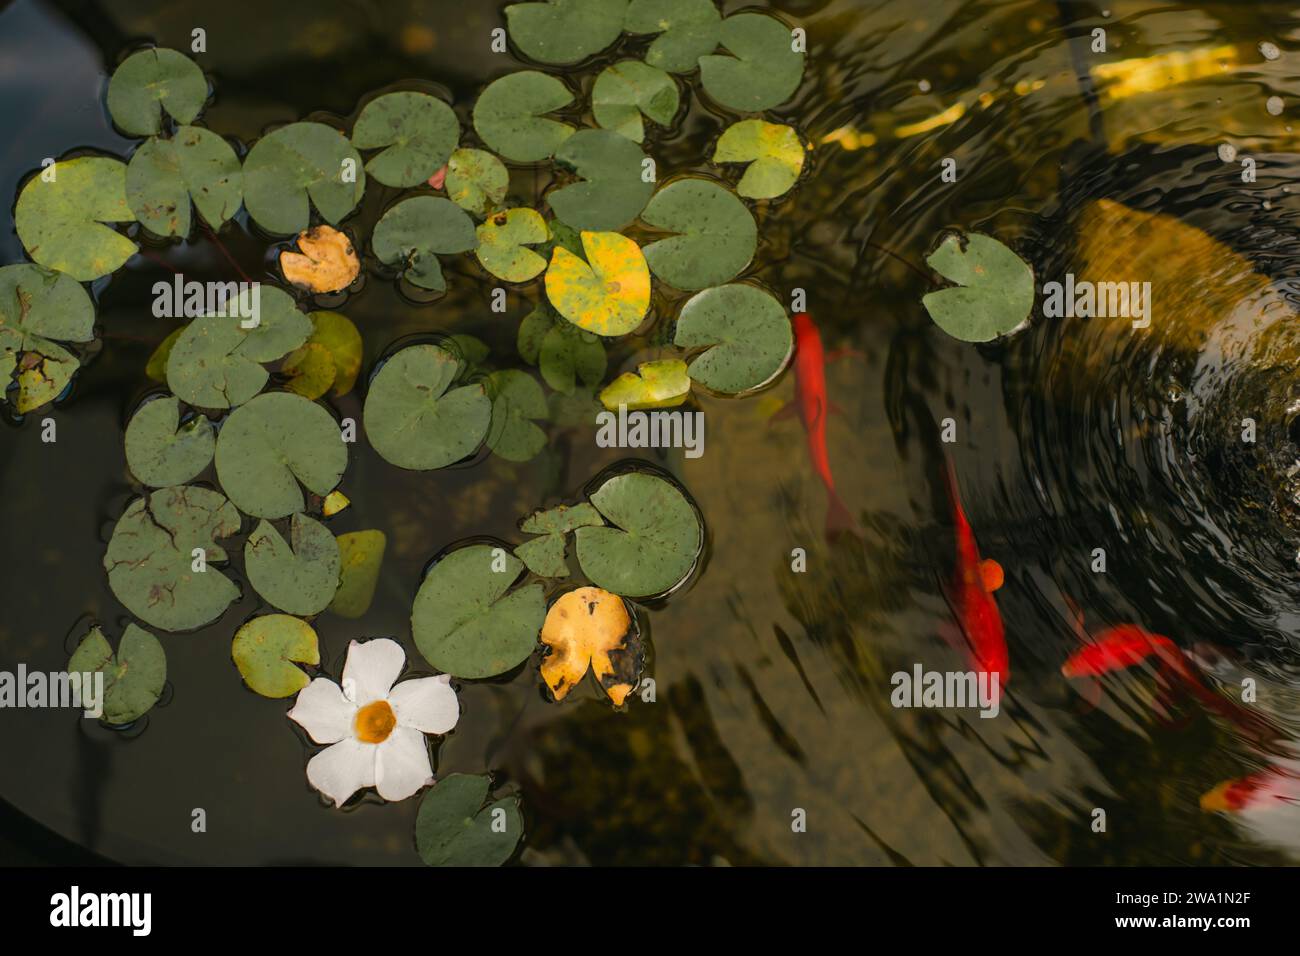 Backyard Koi pond with fish swimming among lilly pads Stock Photo